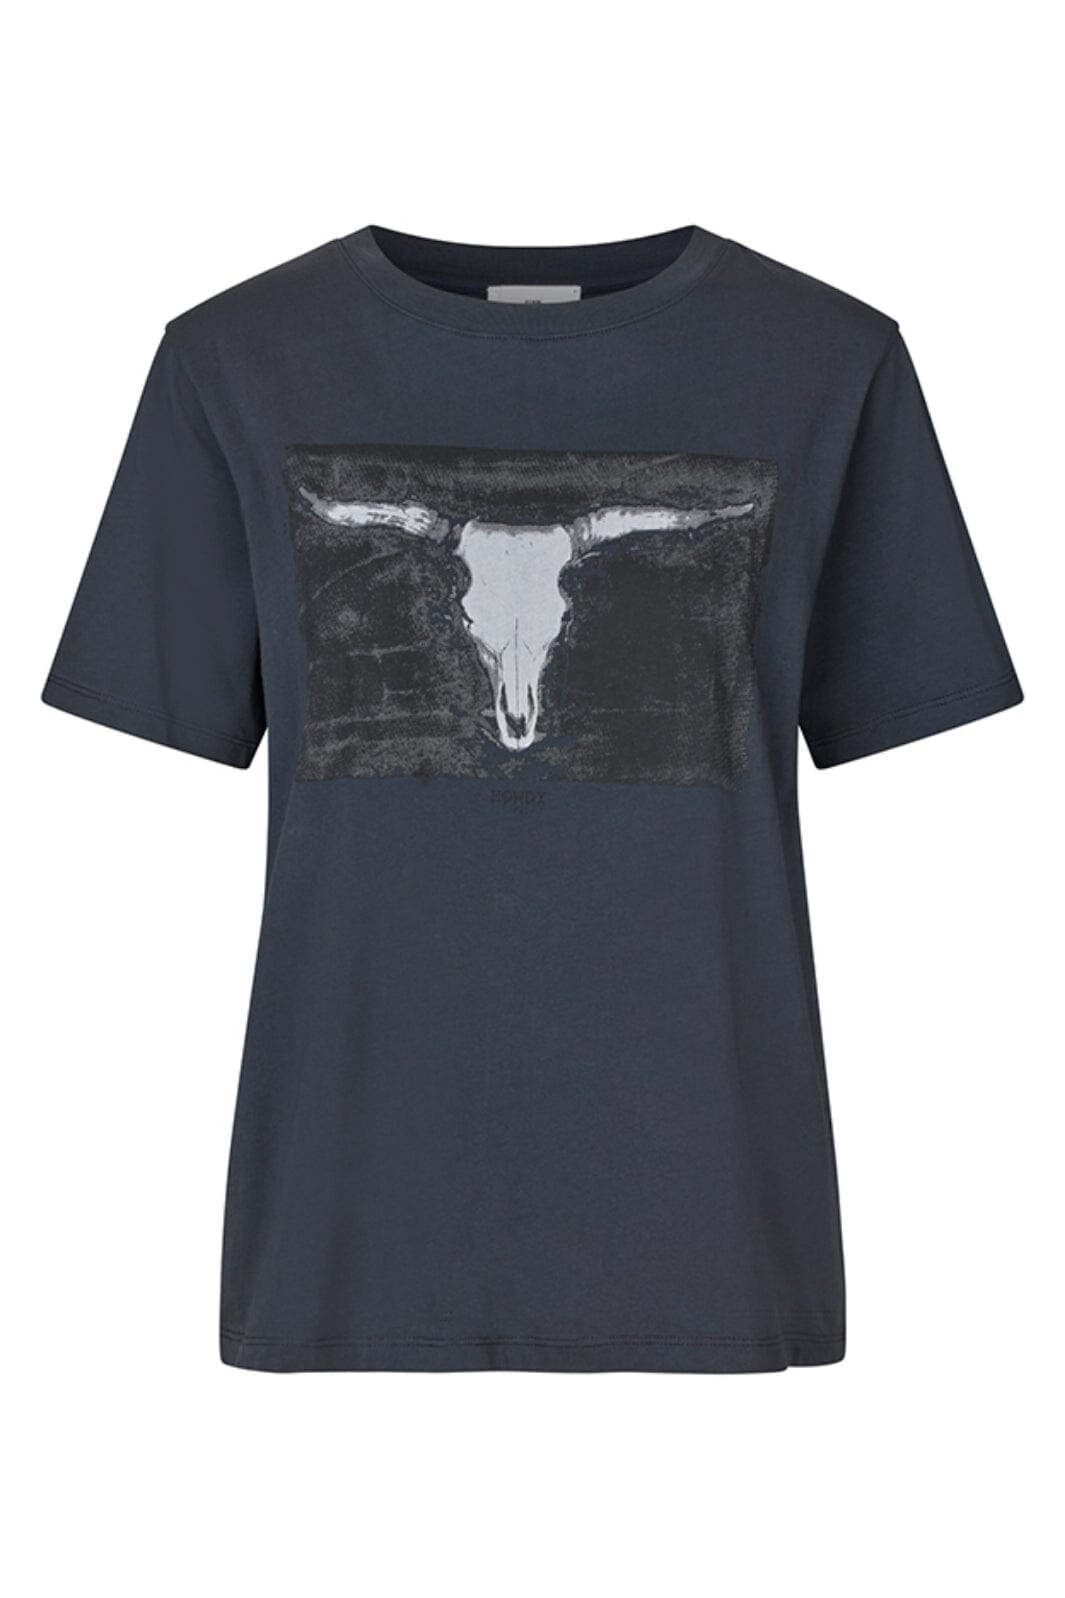 Global Funk - Howdy-M - N73 Dark Grey T-shirts 